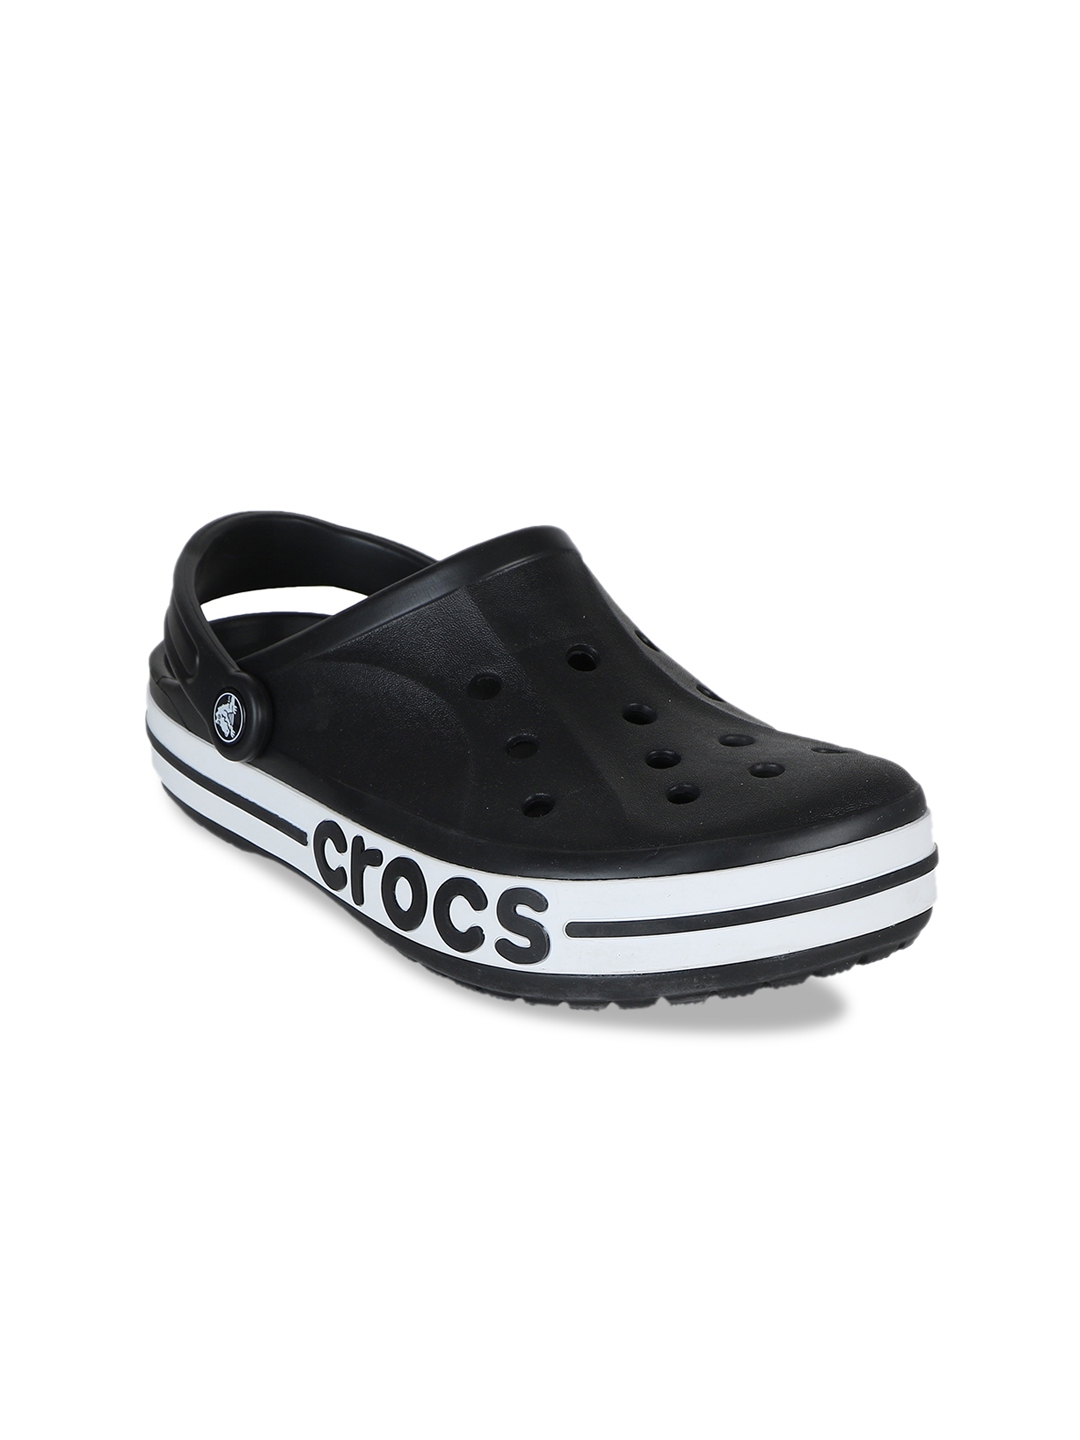 Buy Crocs Men Black & White Clogs - Sandals for Men 9648779 | Myntra